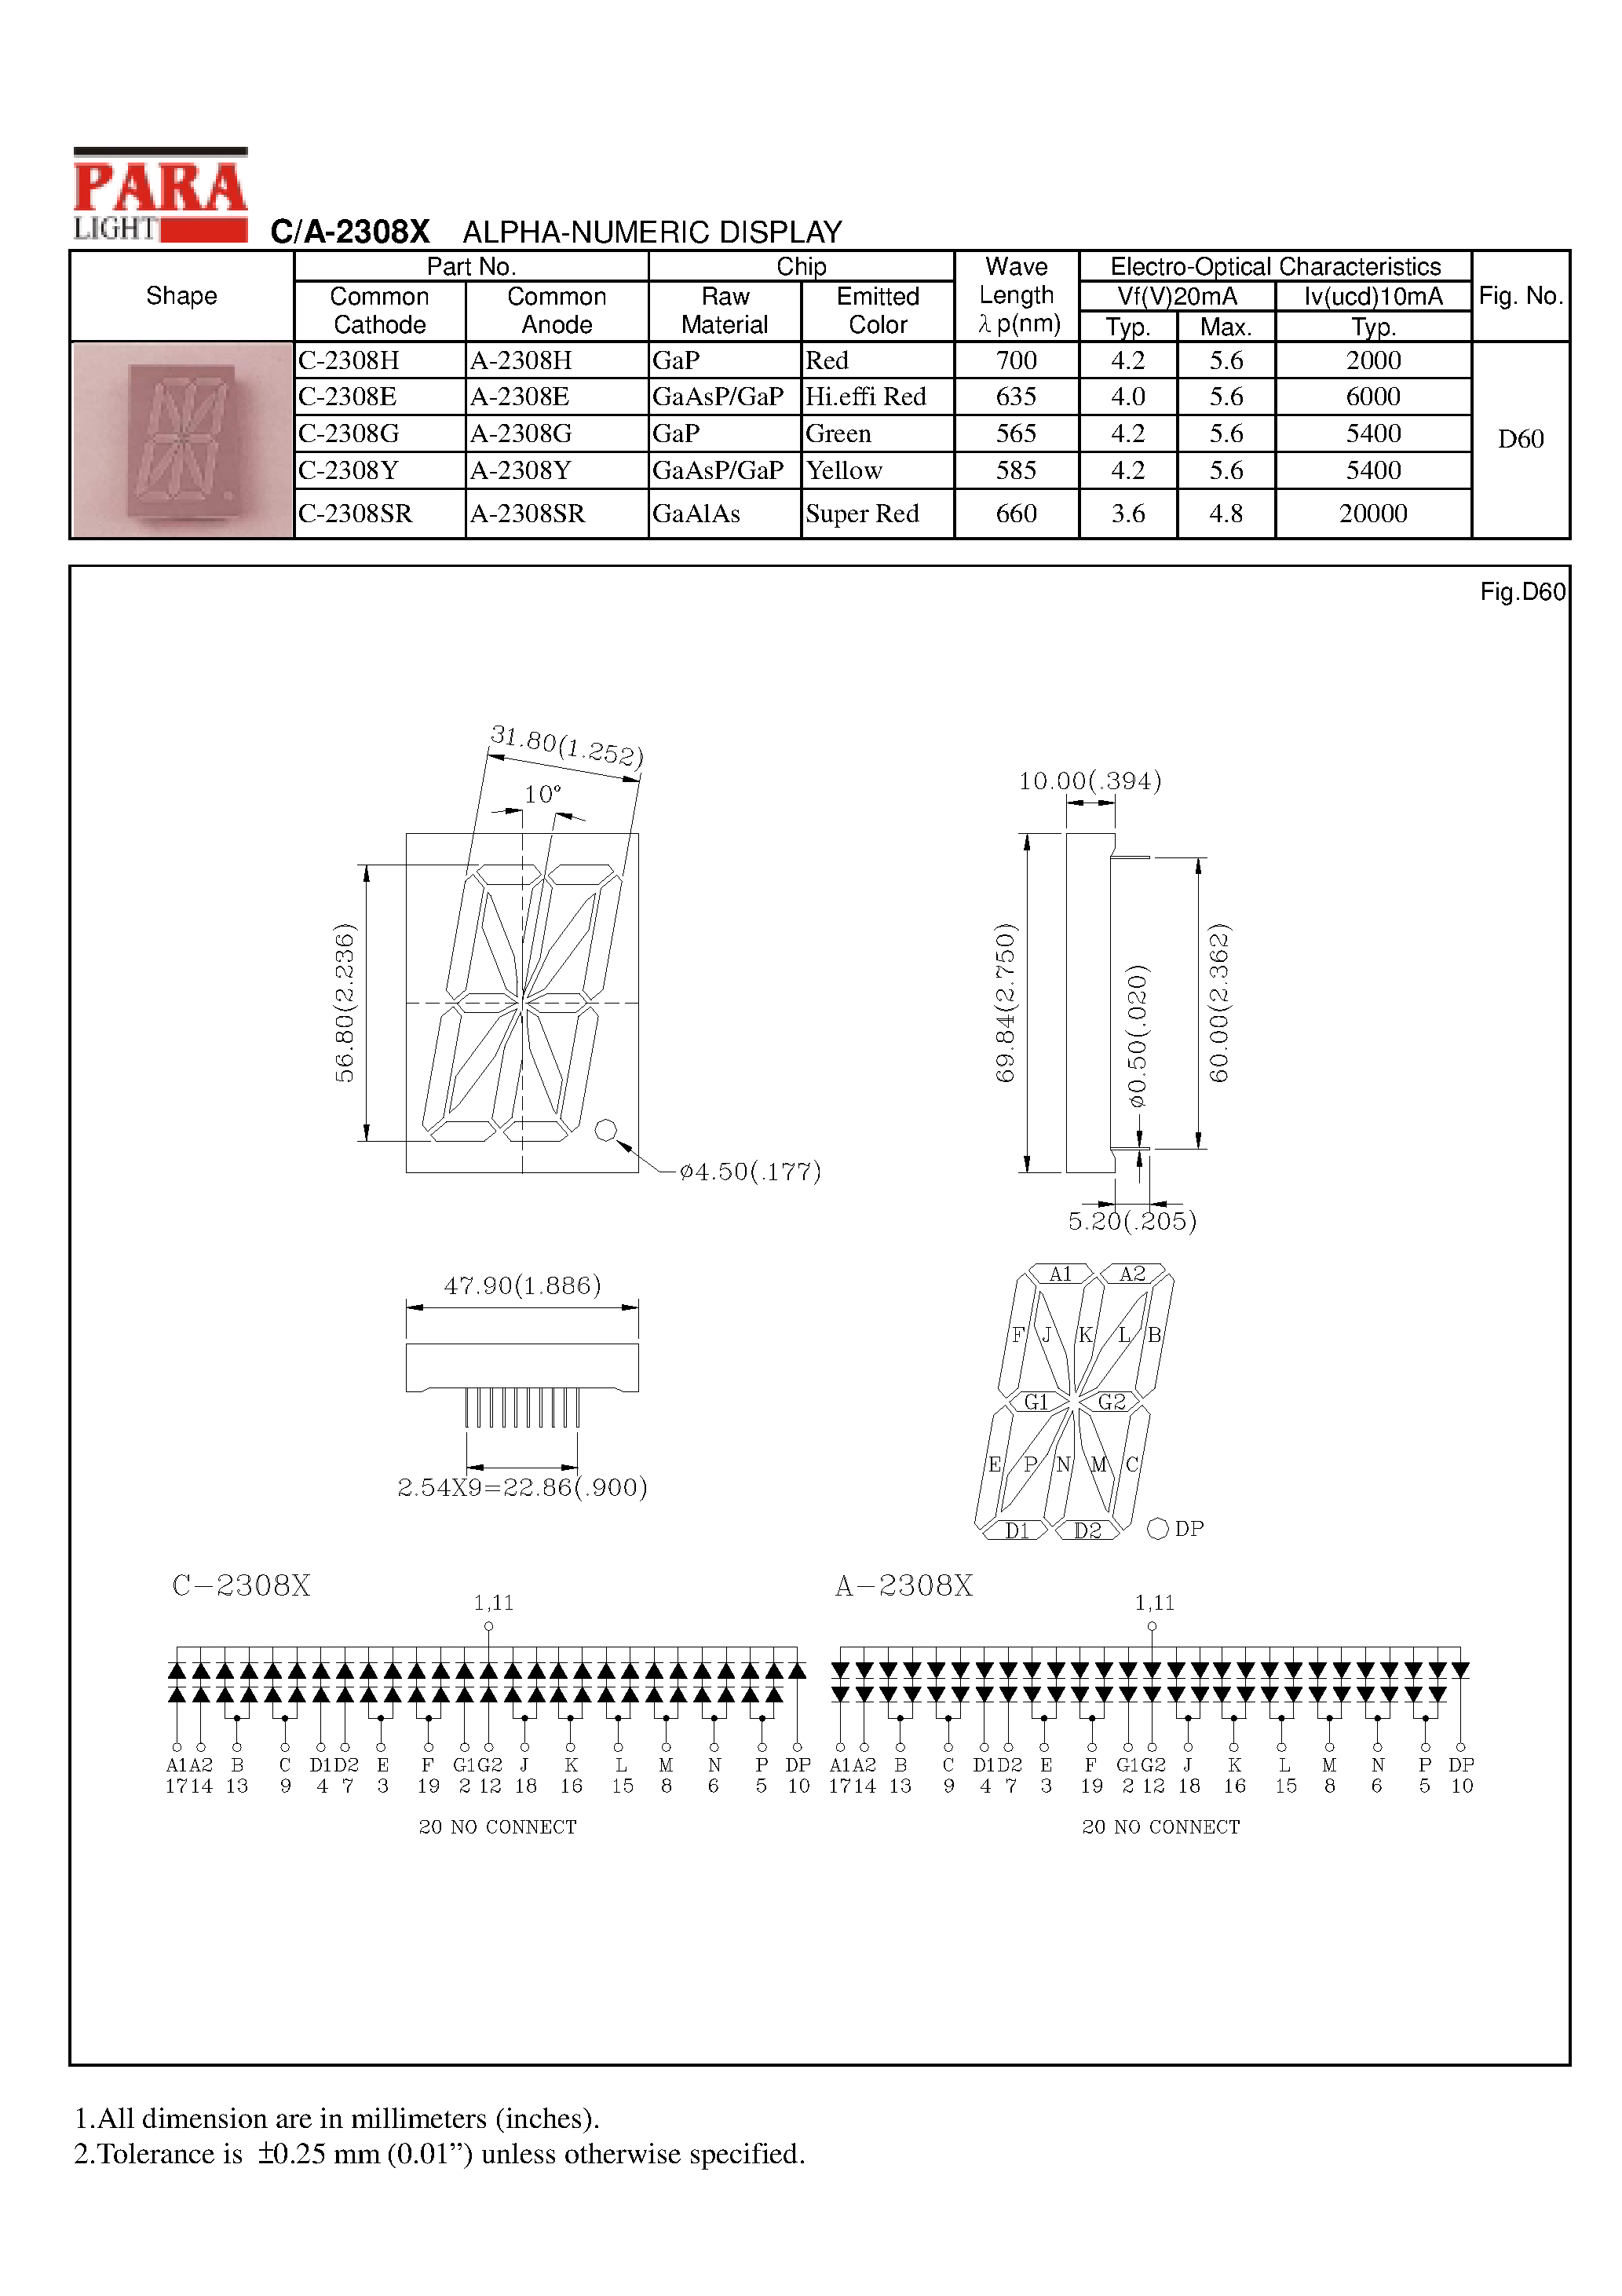 Datasheet A-2308X - ALPHA-NUMERIC DISPLAY page 1